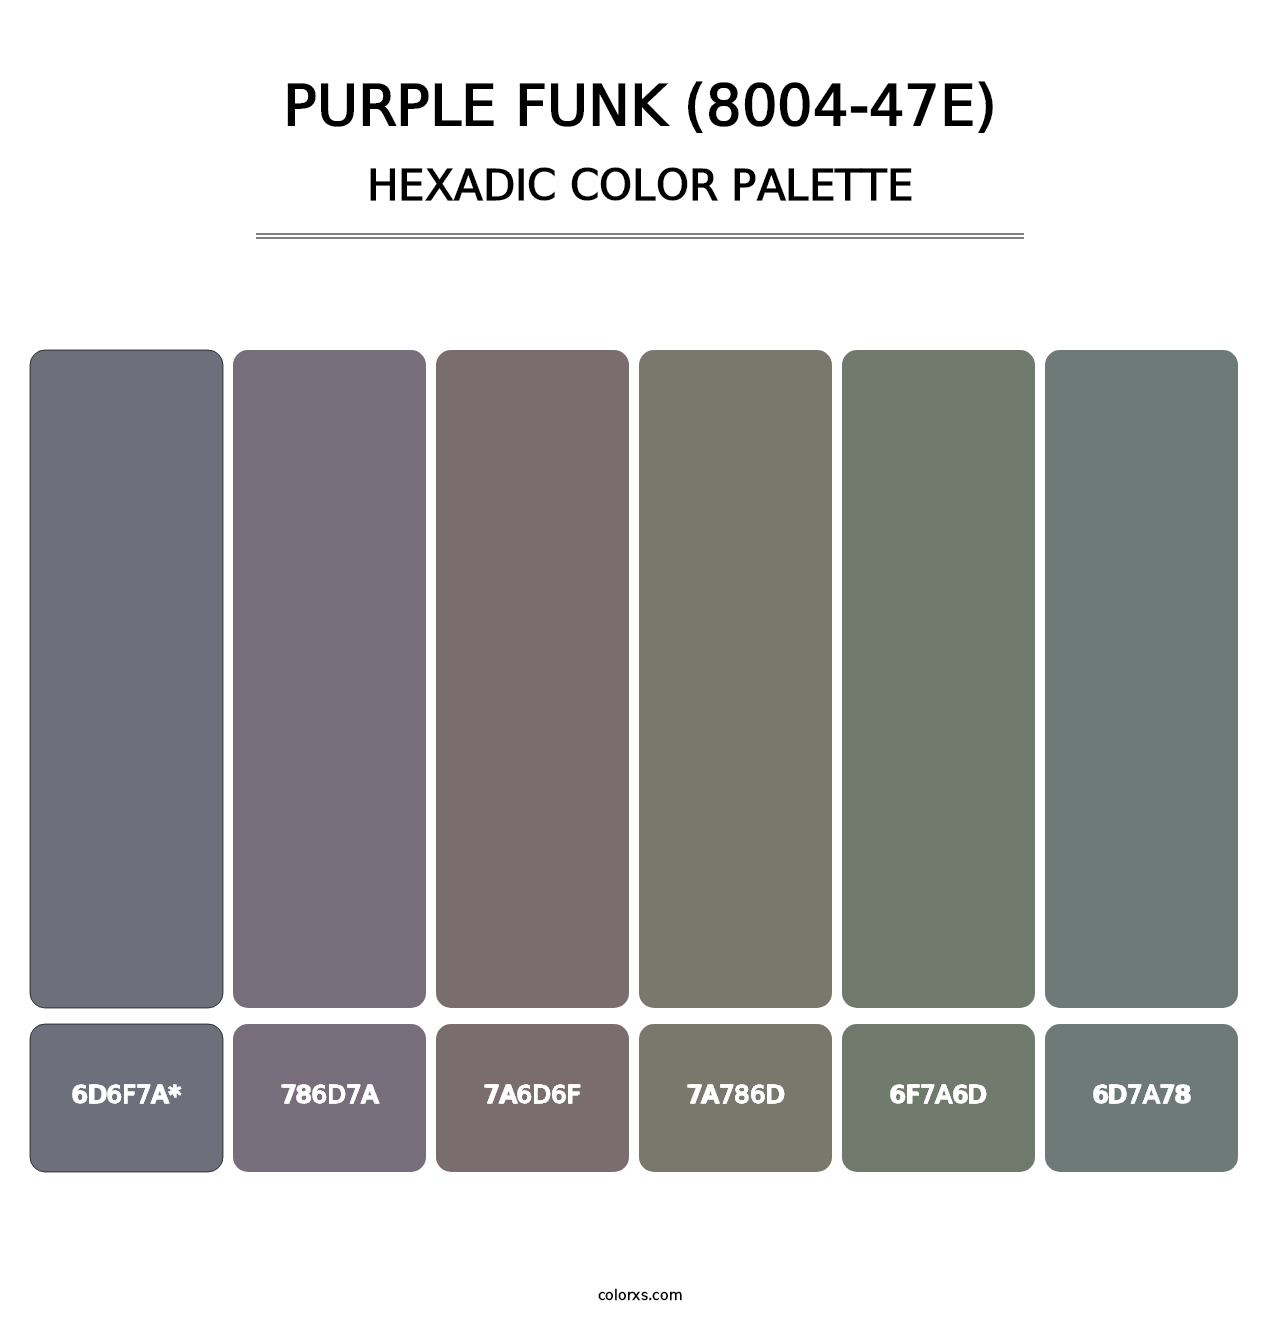 Purple Funk (8004-47E) - Hexadic Color Palette